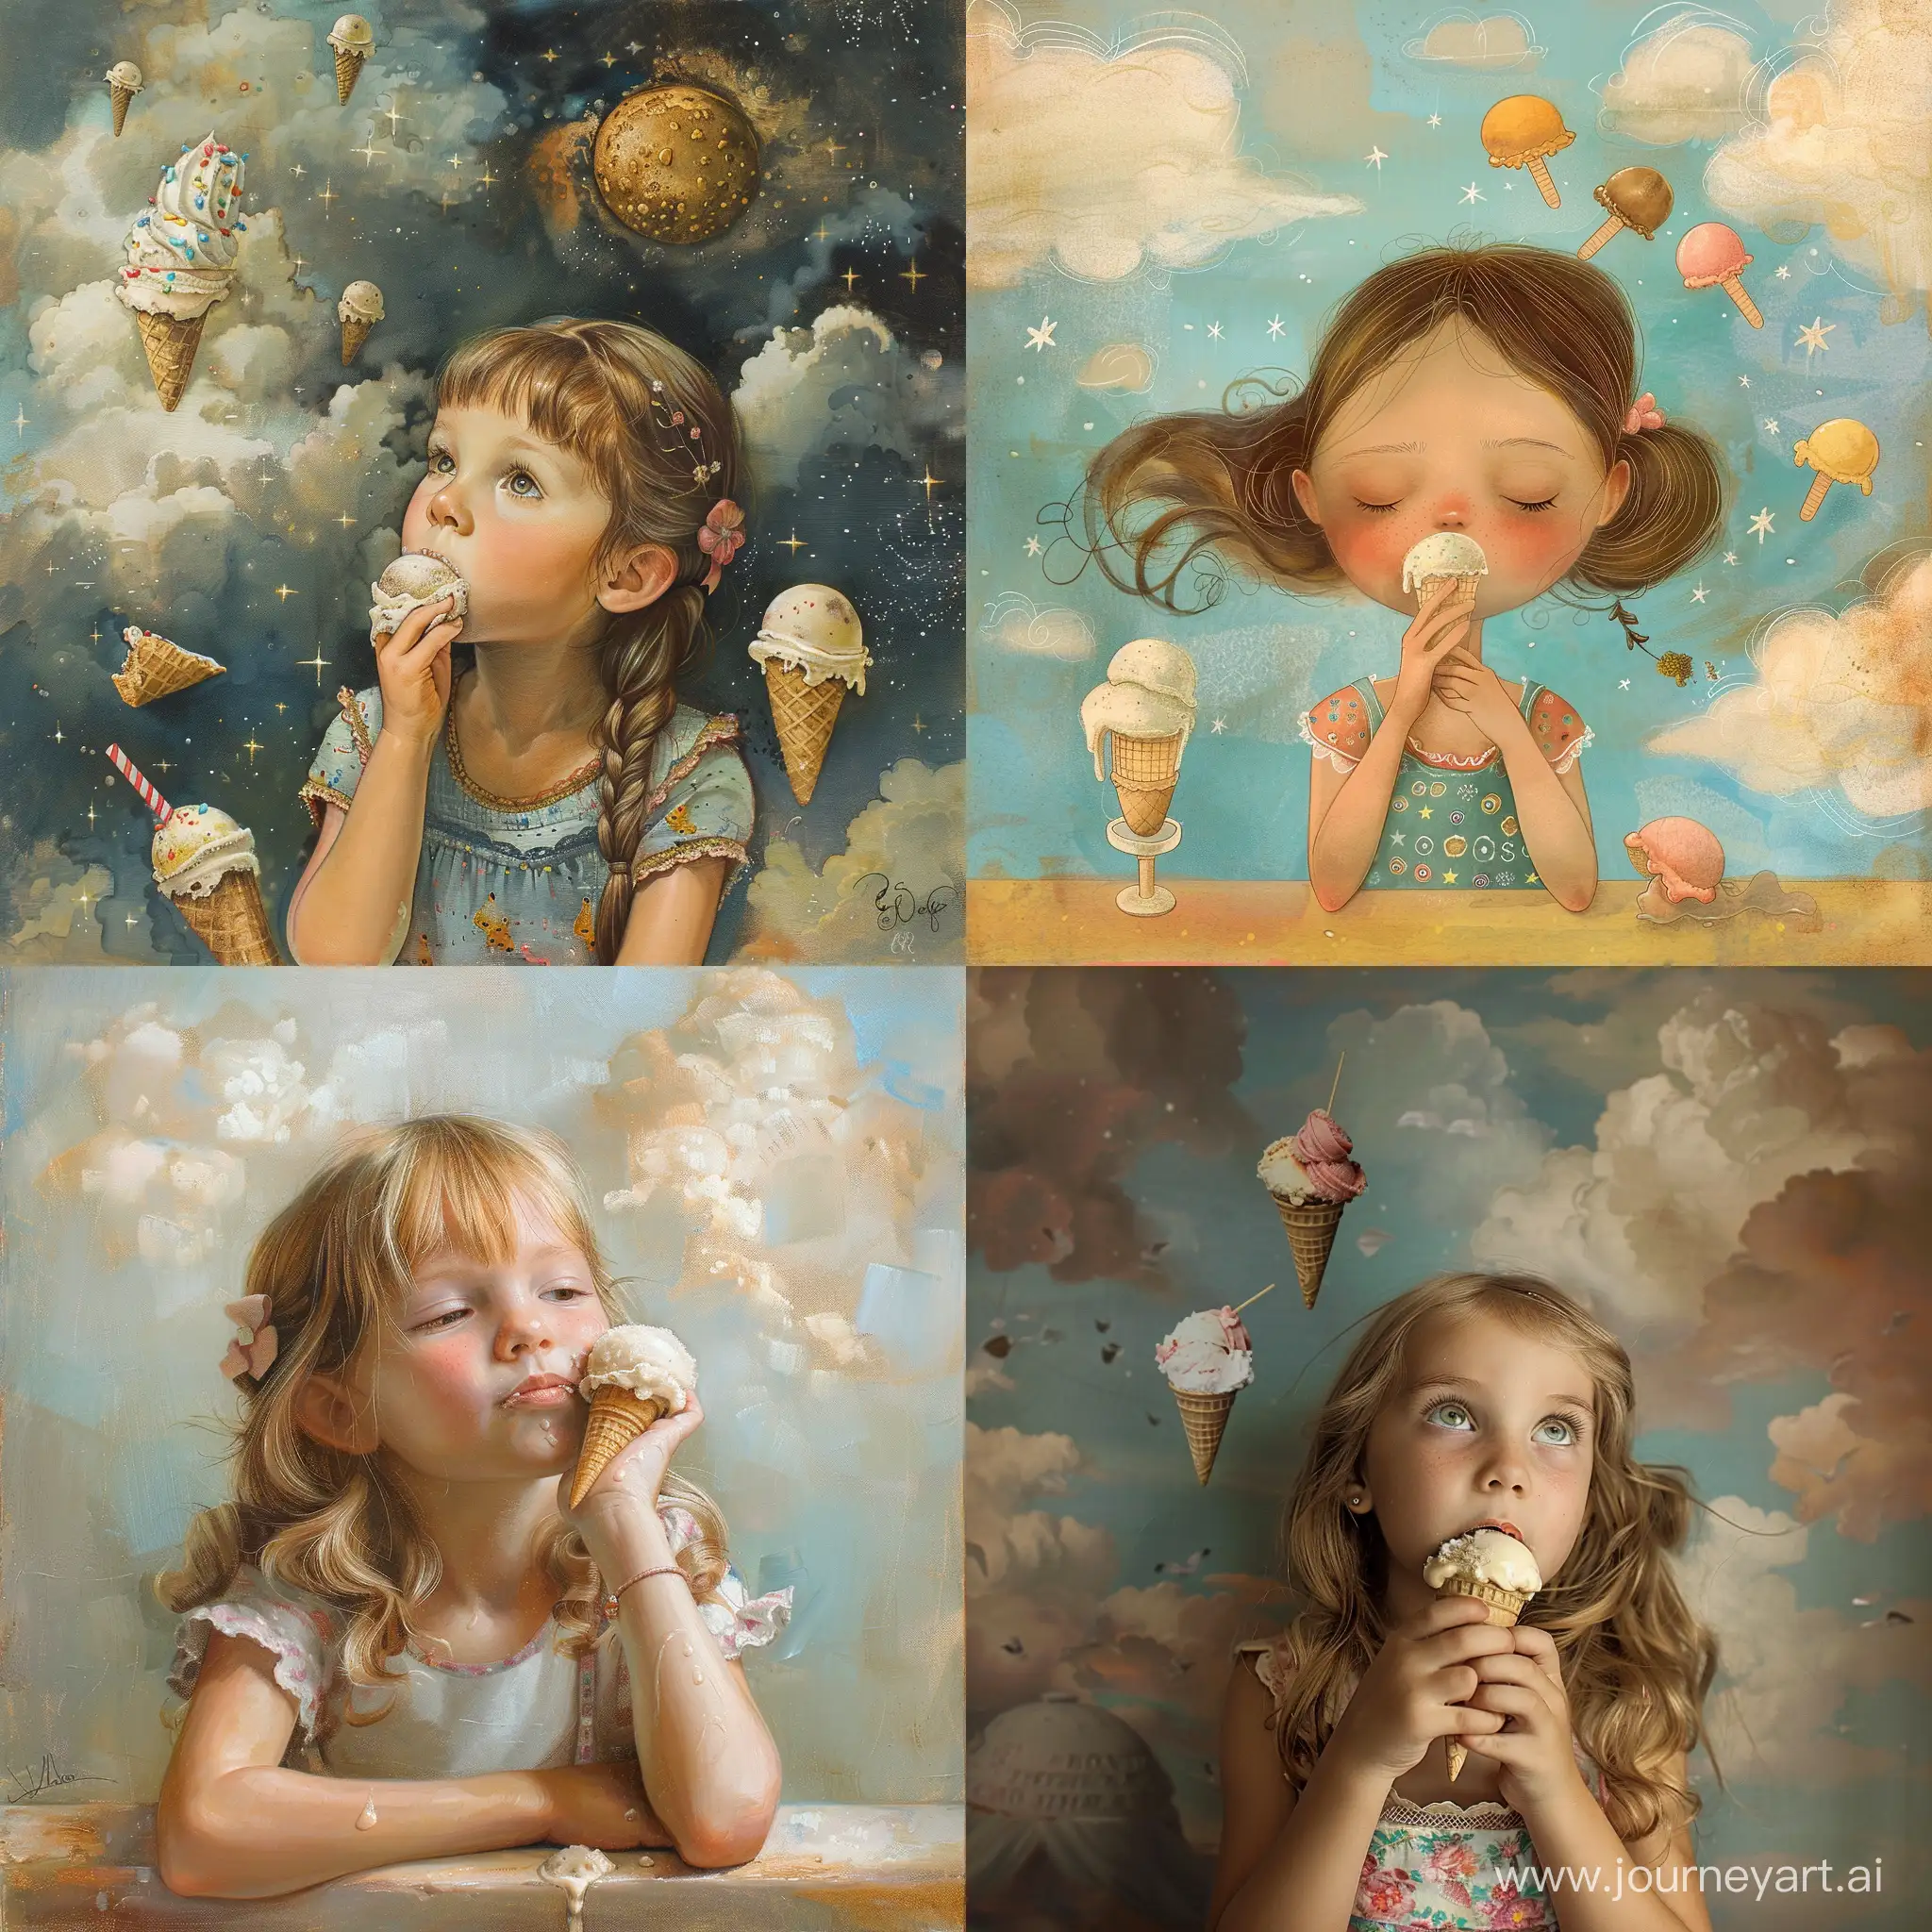 Young-Girl-Enjoying-Ice-Cream-in-Daydream